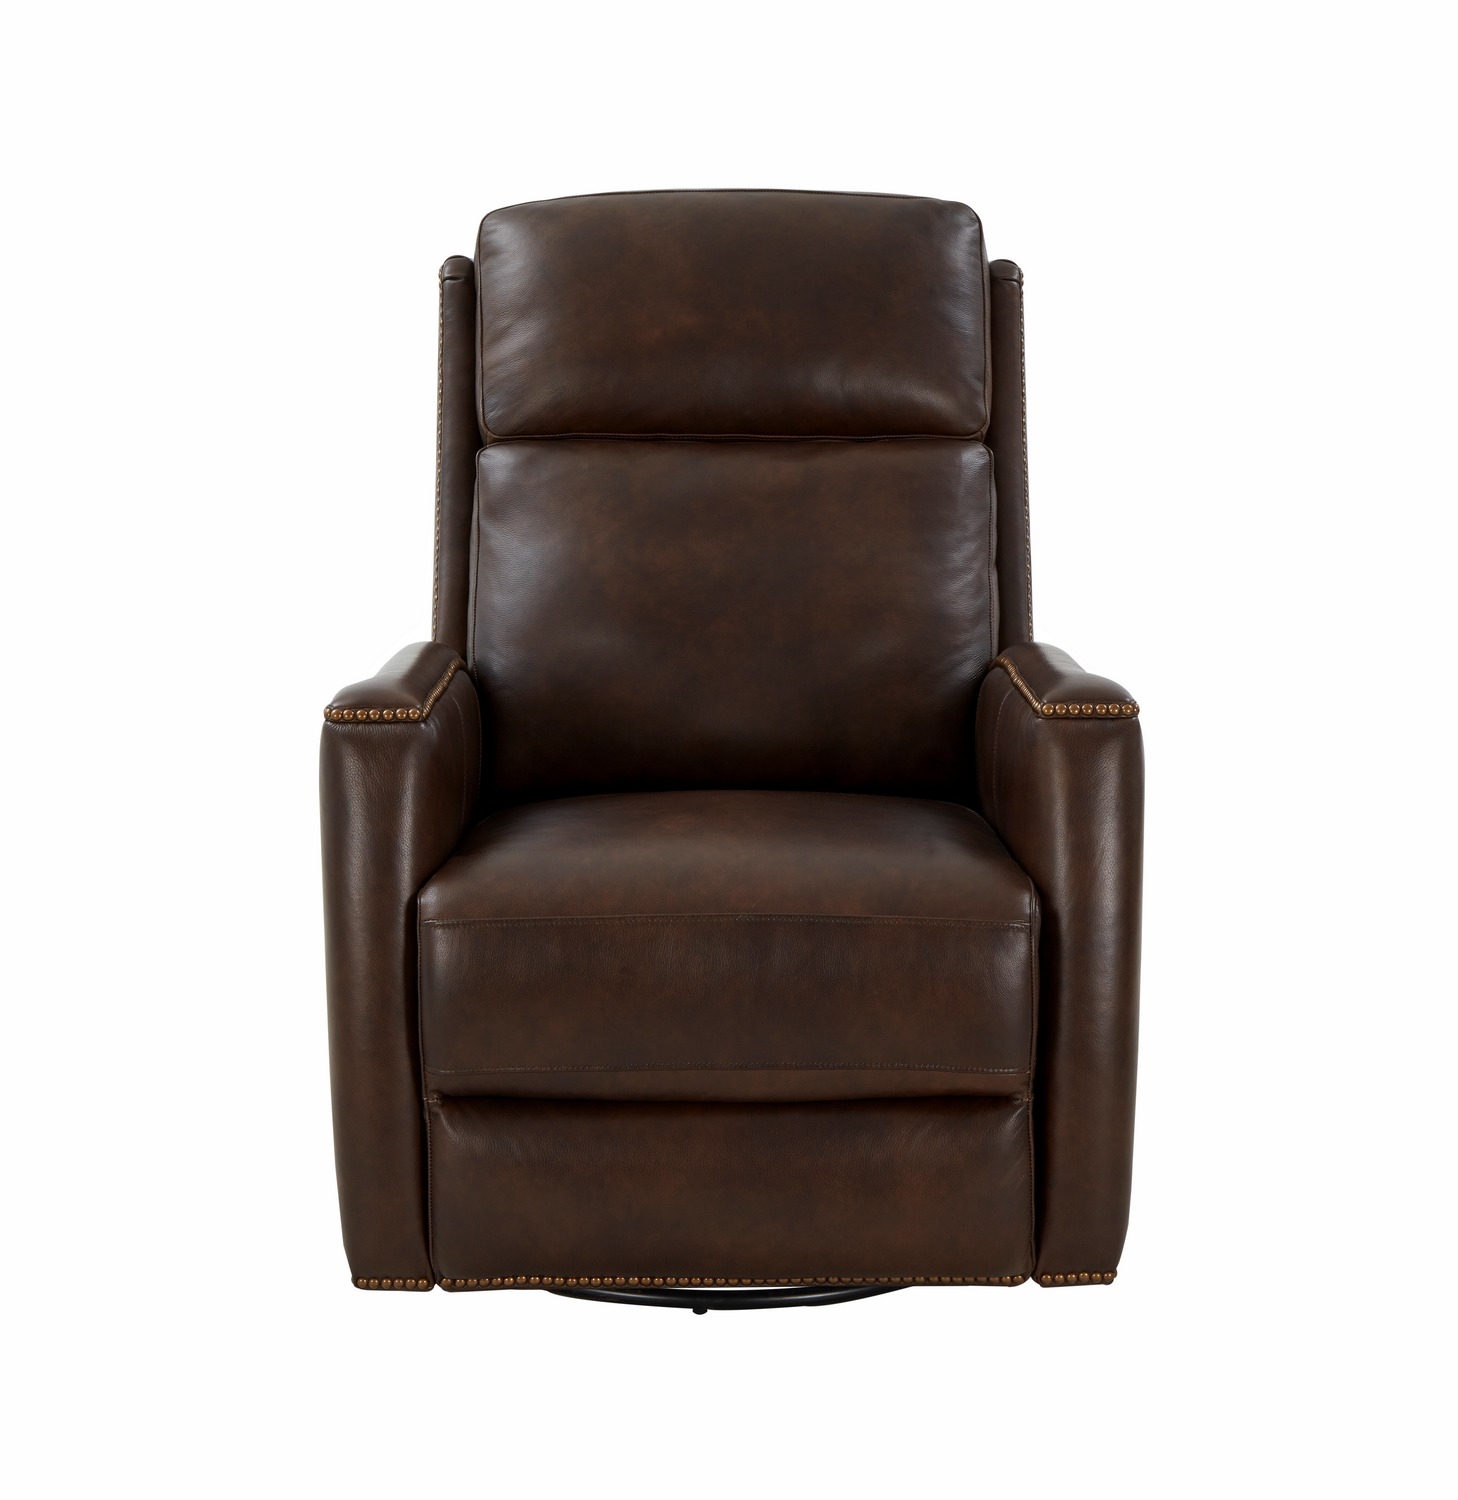 Barcalounger Brandt Power Swivel Glider Recliner Chair with Power Head Rest - Ashford Walnut/All Leather